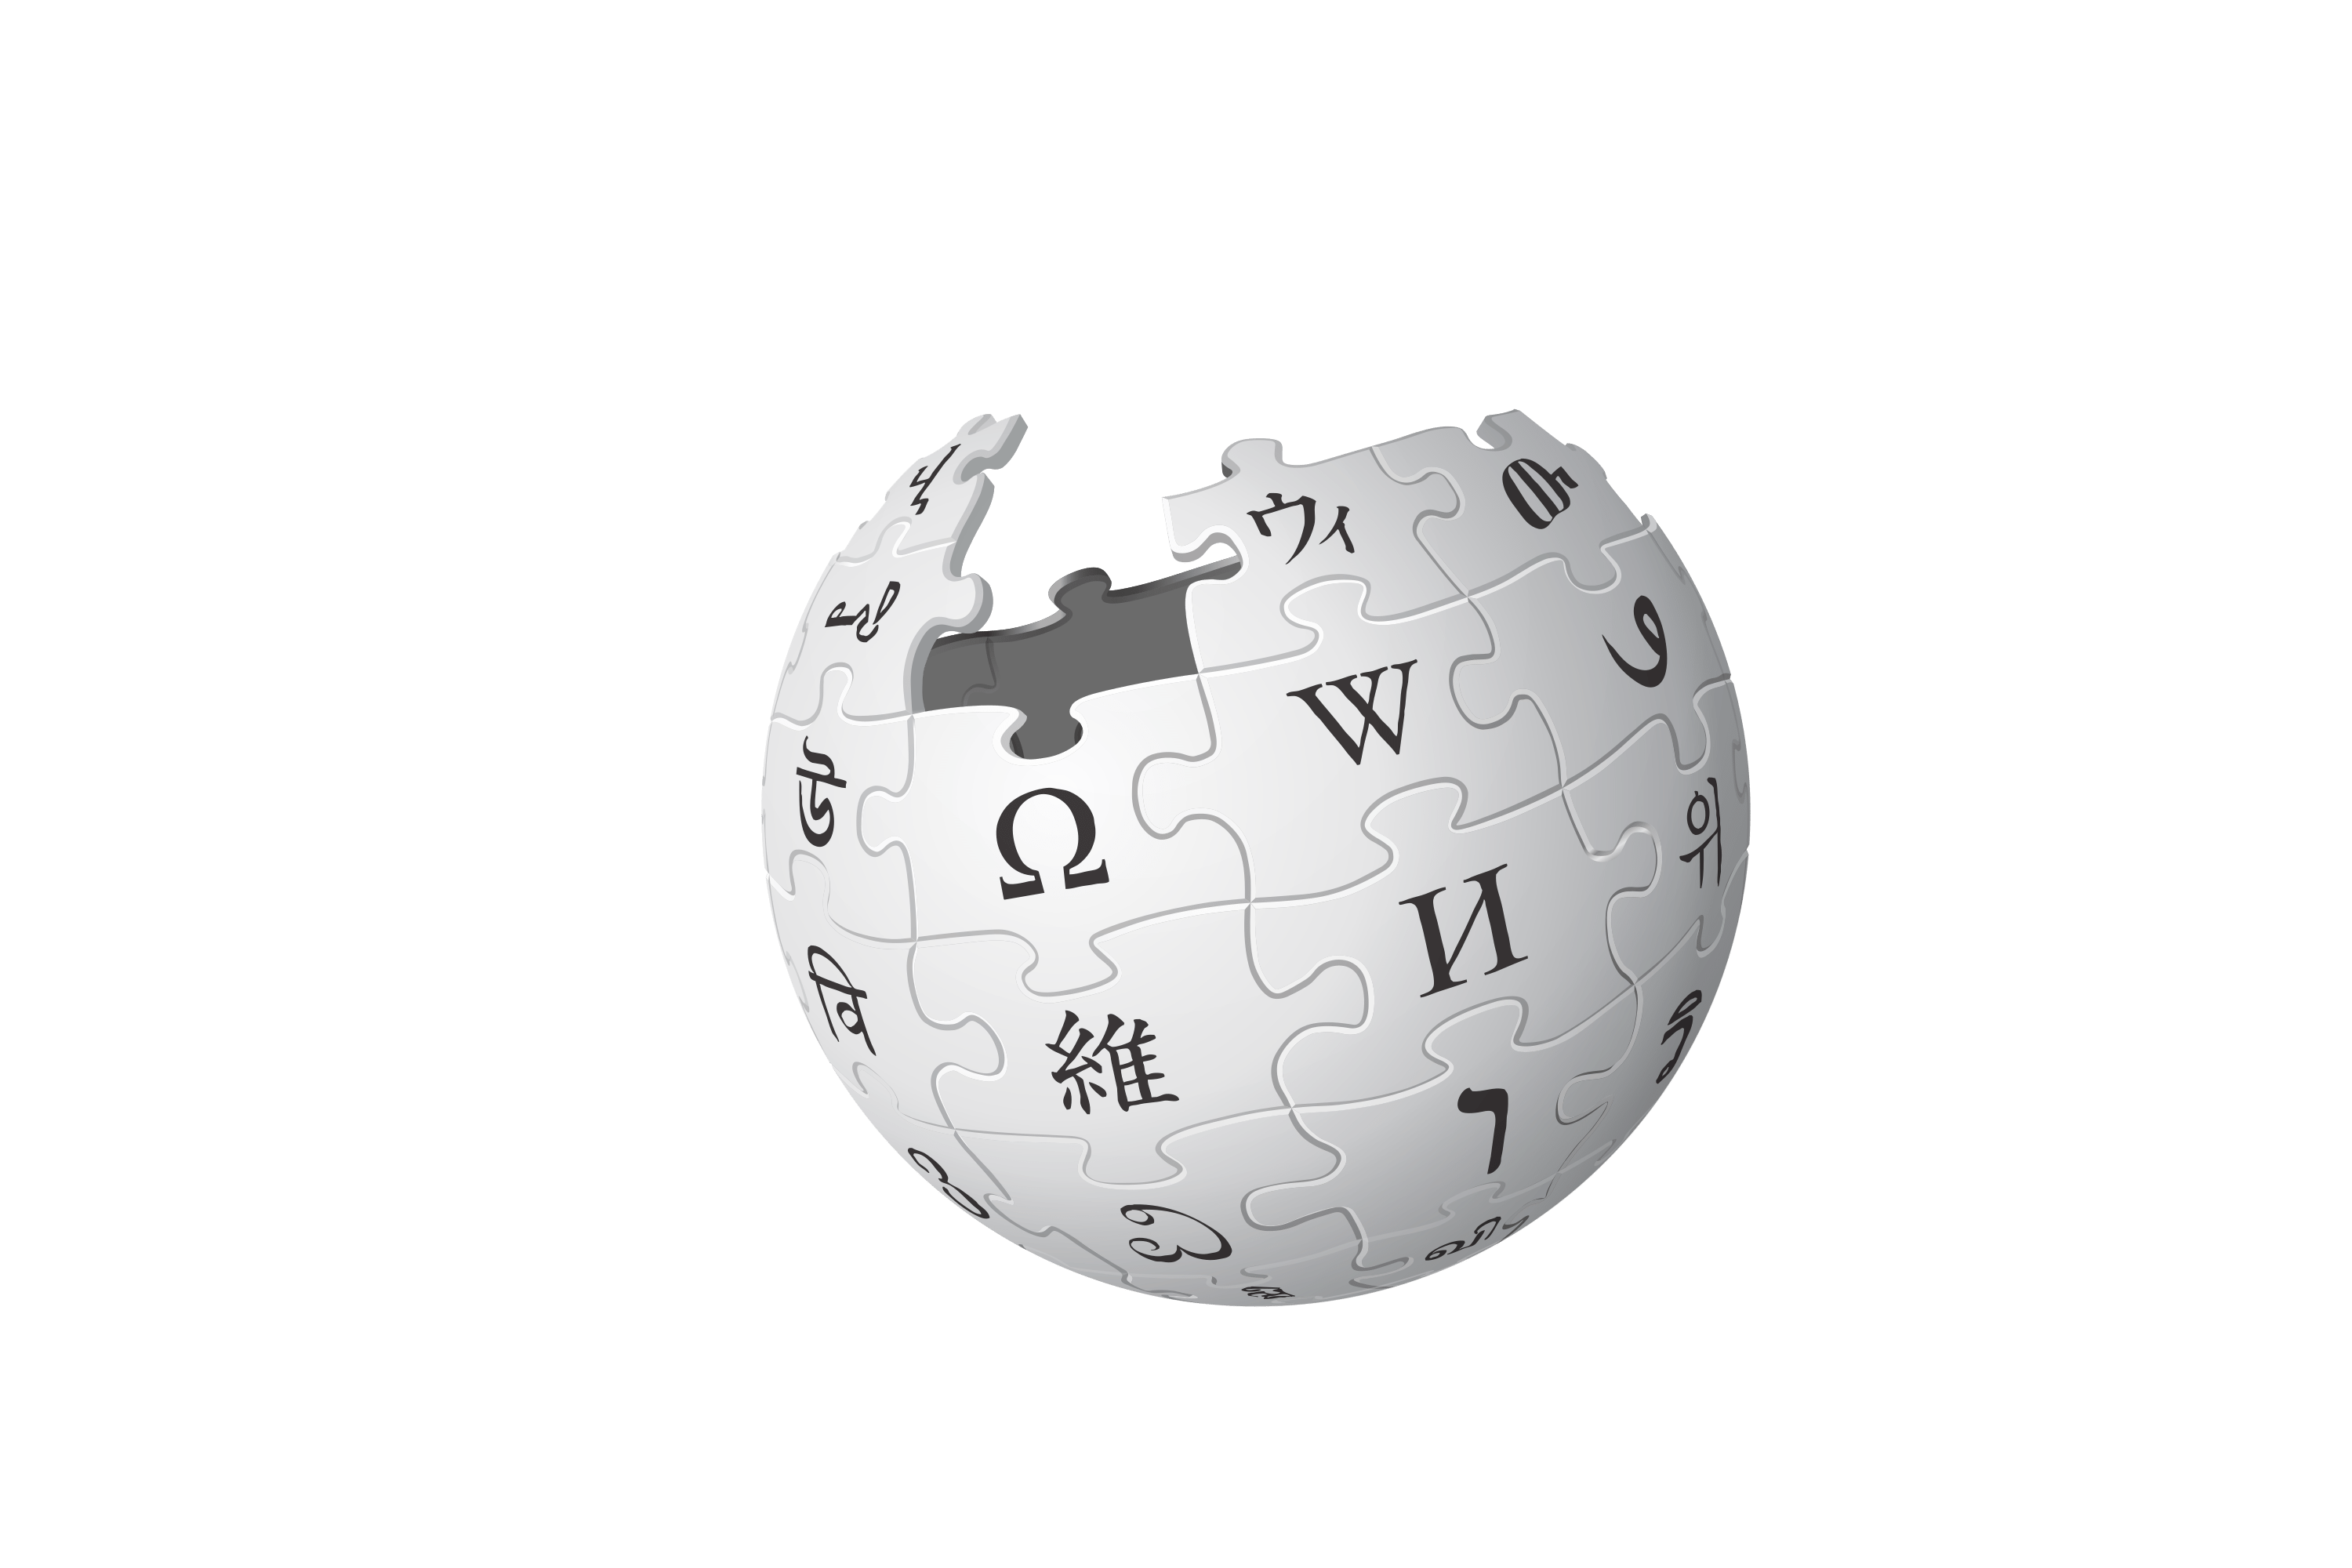 3 https ru wikipedia org. Википедия логотип. Значок Википедии. Логотип Википедии на прозрачном фоне. Википедия картинки.